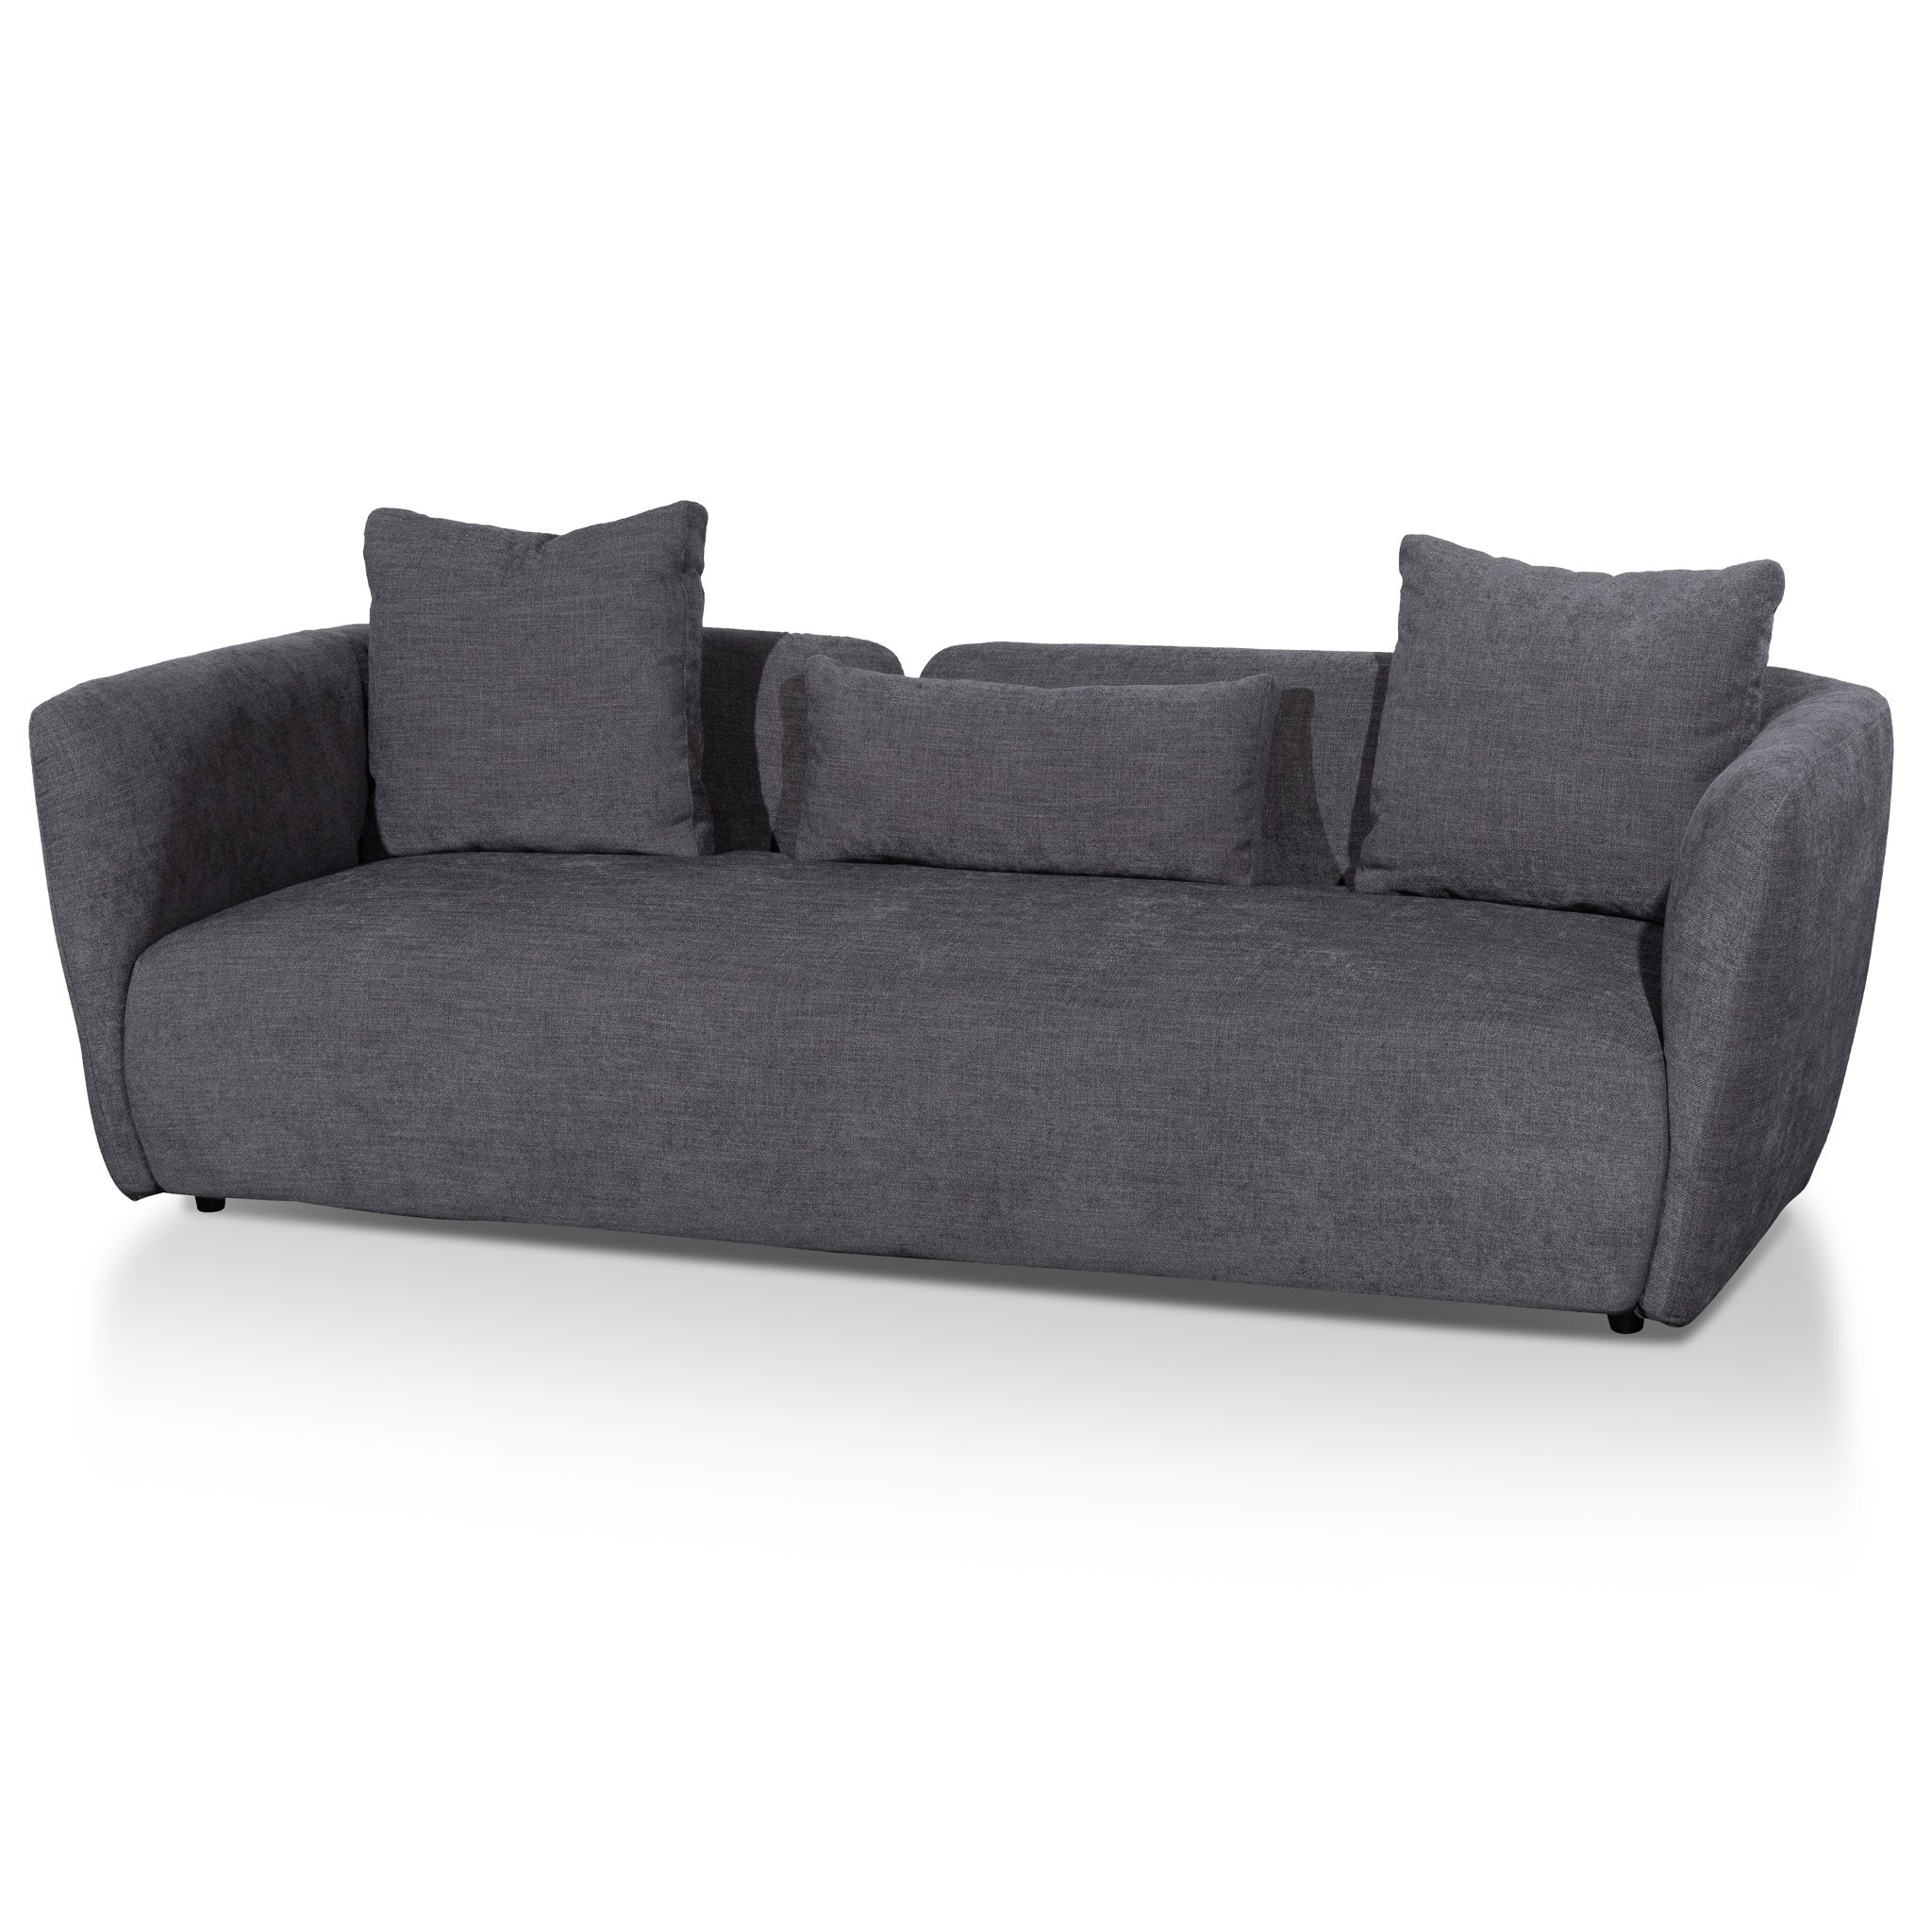 Savannah 3 Seater Fabric Sofa - Ash Grey